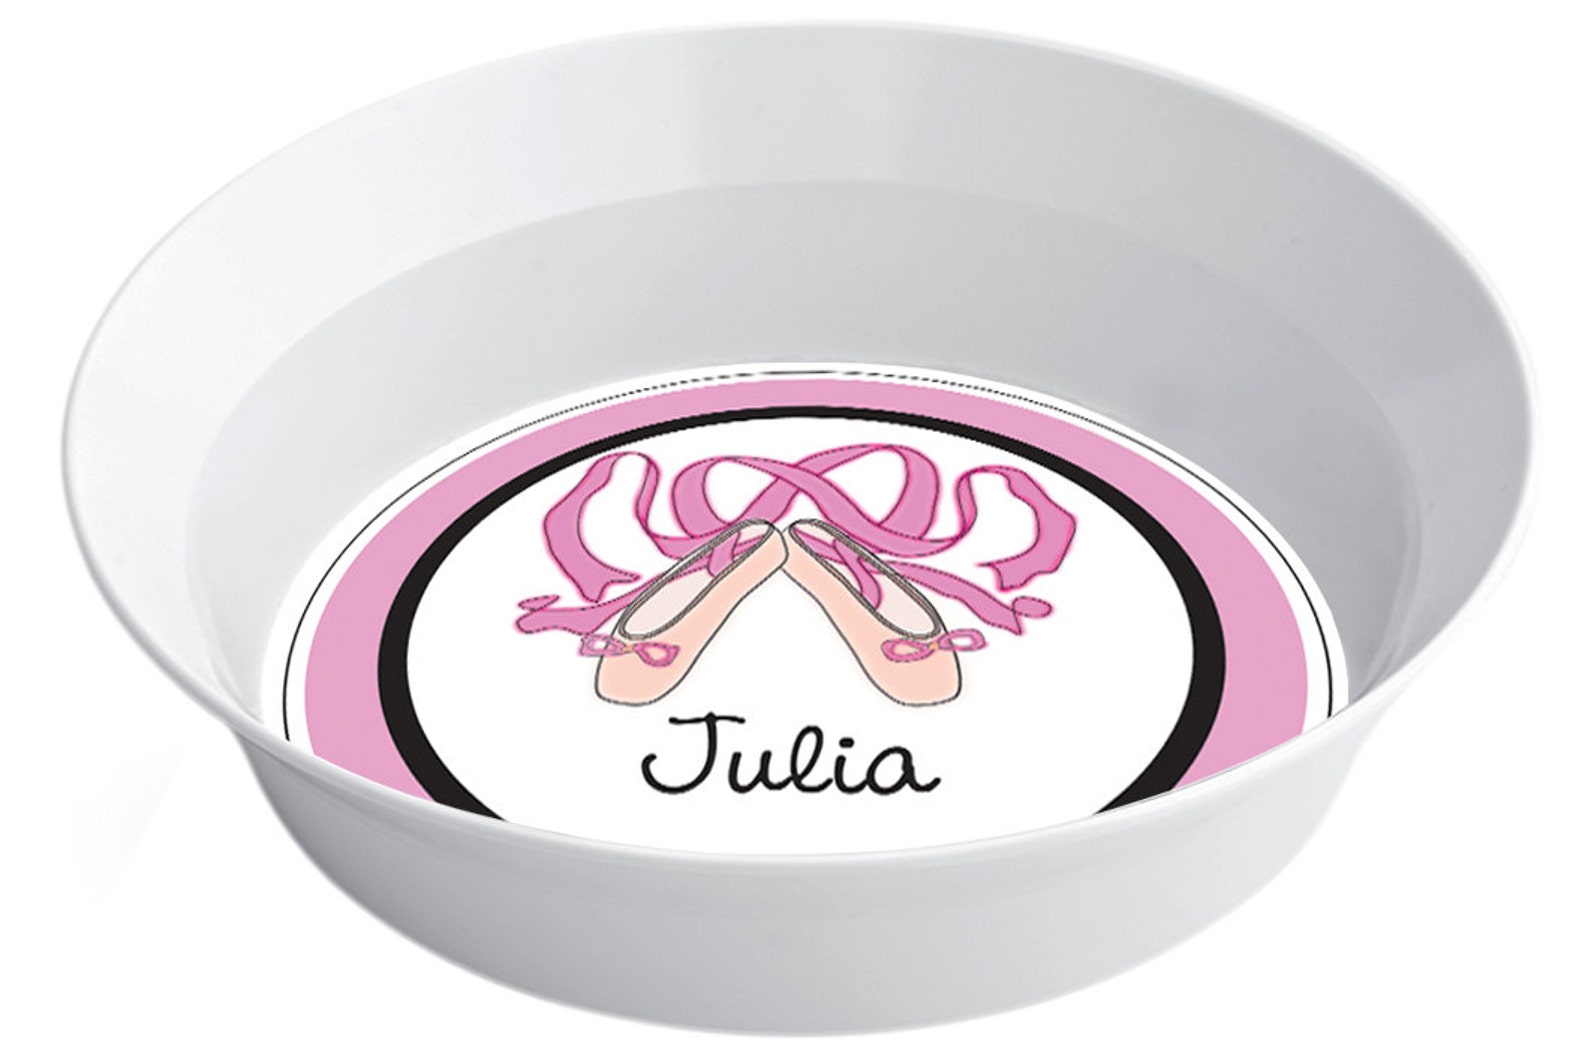 ballerina bowl - pink ballet shoes personalized melamine round snack bowl - custom girls dance theme bowl - ballet recital gift